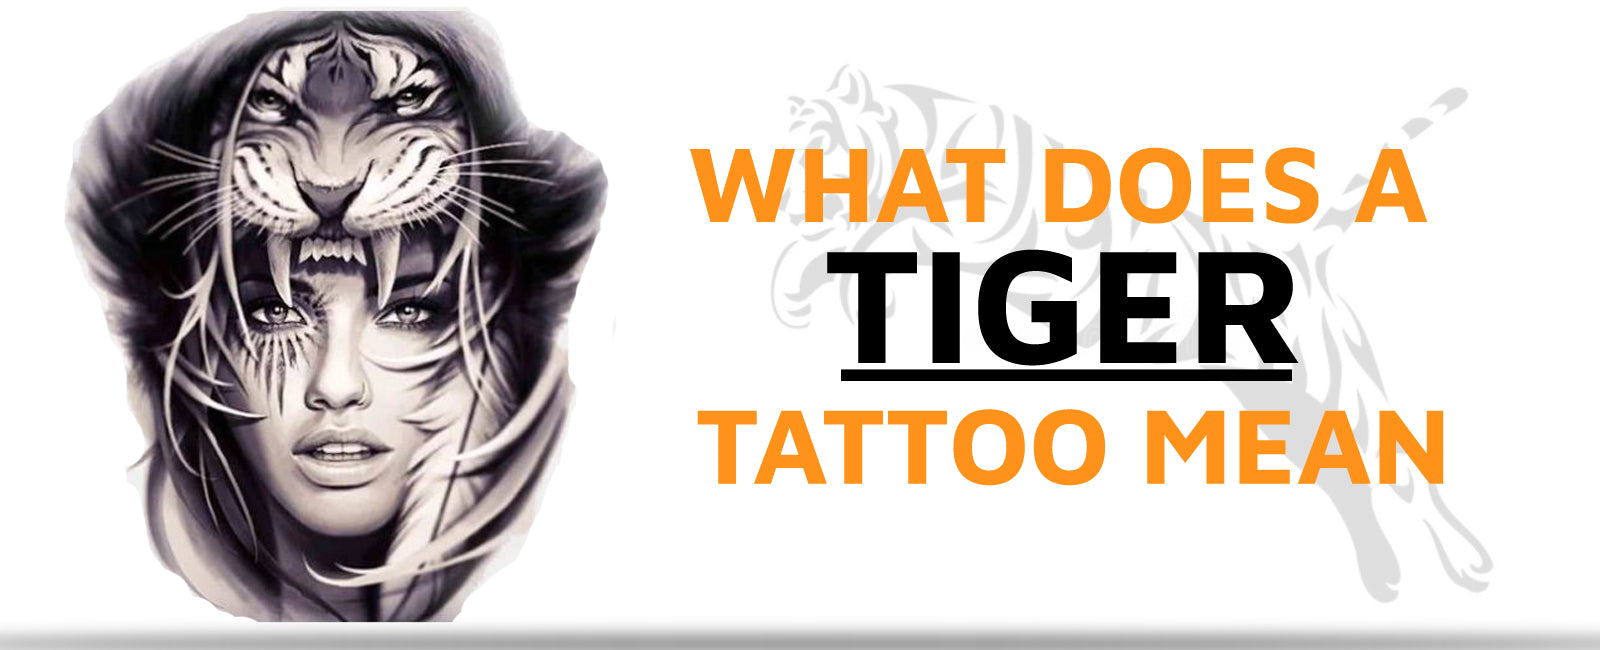 Tattoo uploaded by Joao Castillo Tattoo • Tiger Tattoo Realistic Tattoo  Color • Tattoodo